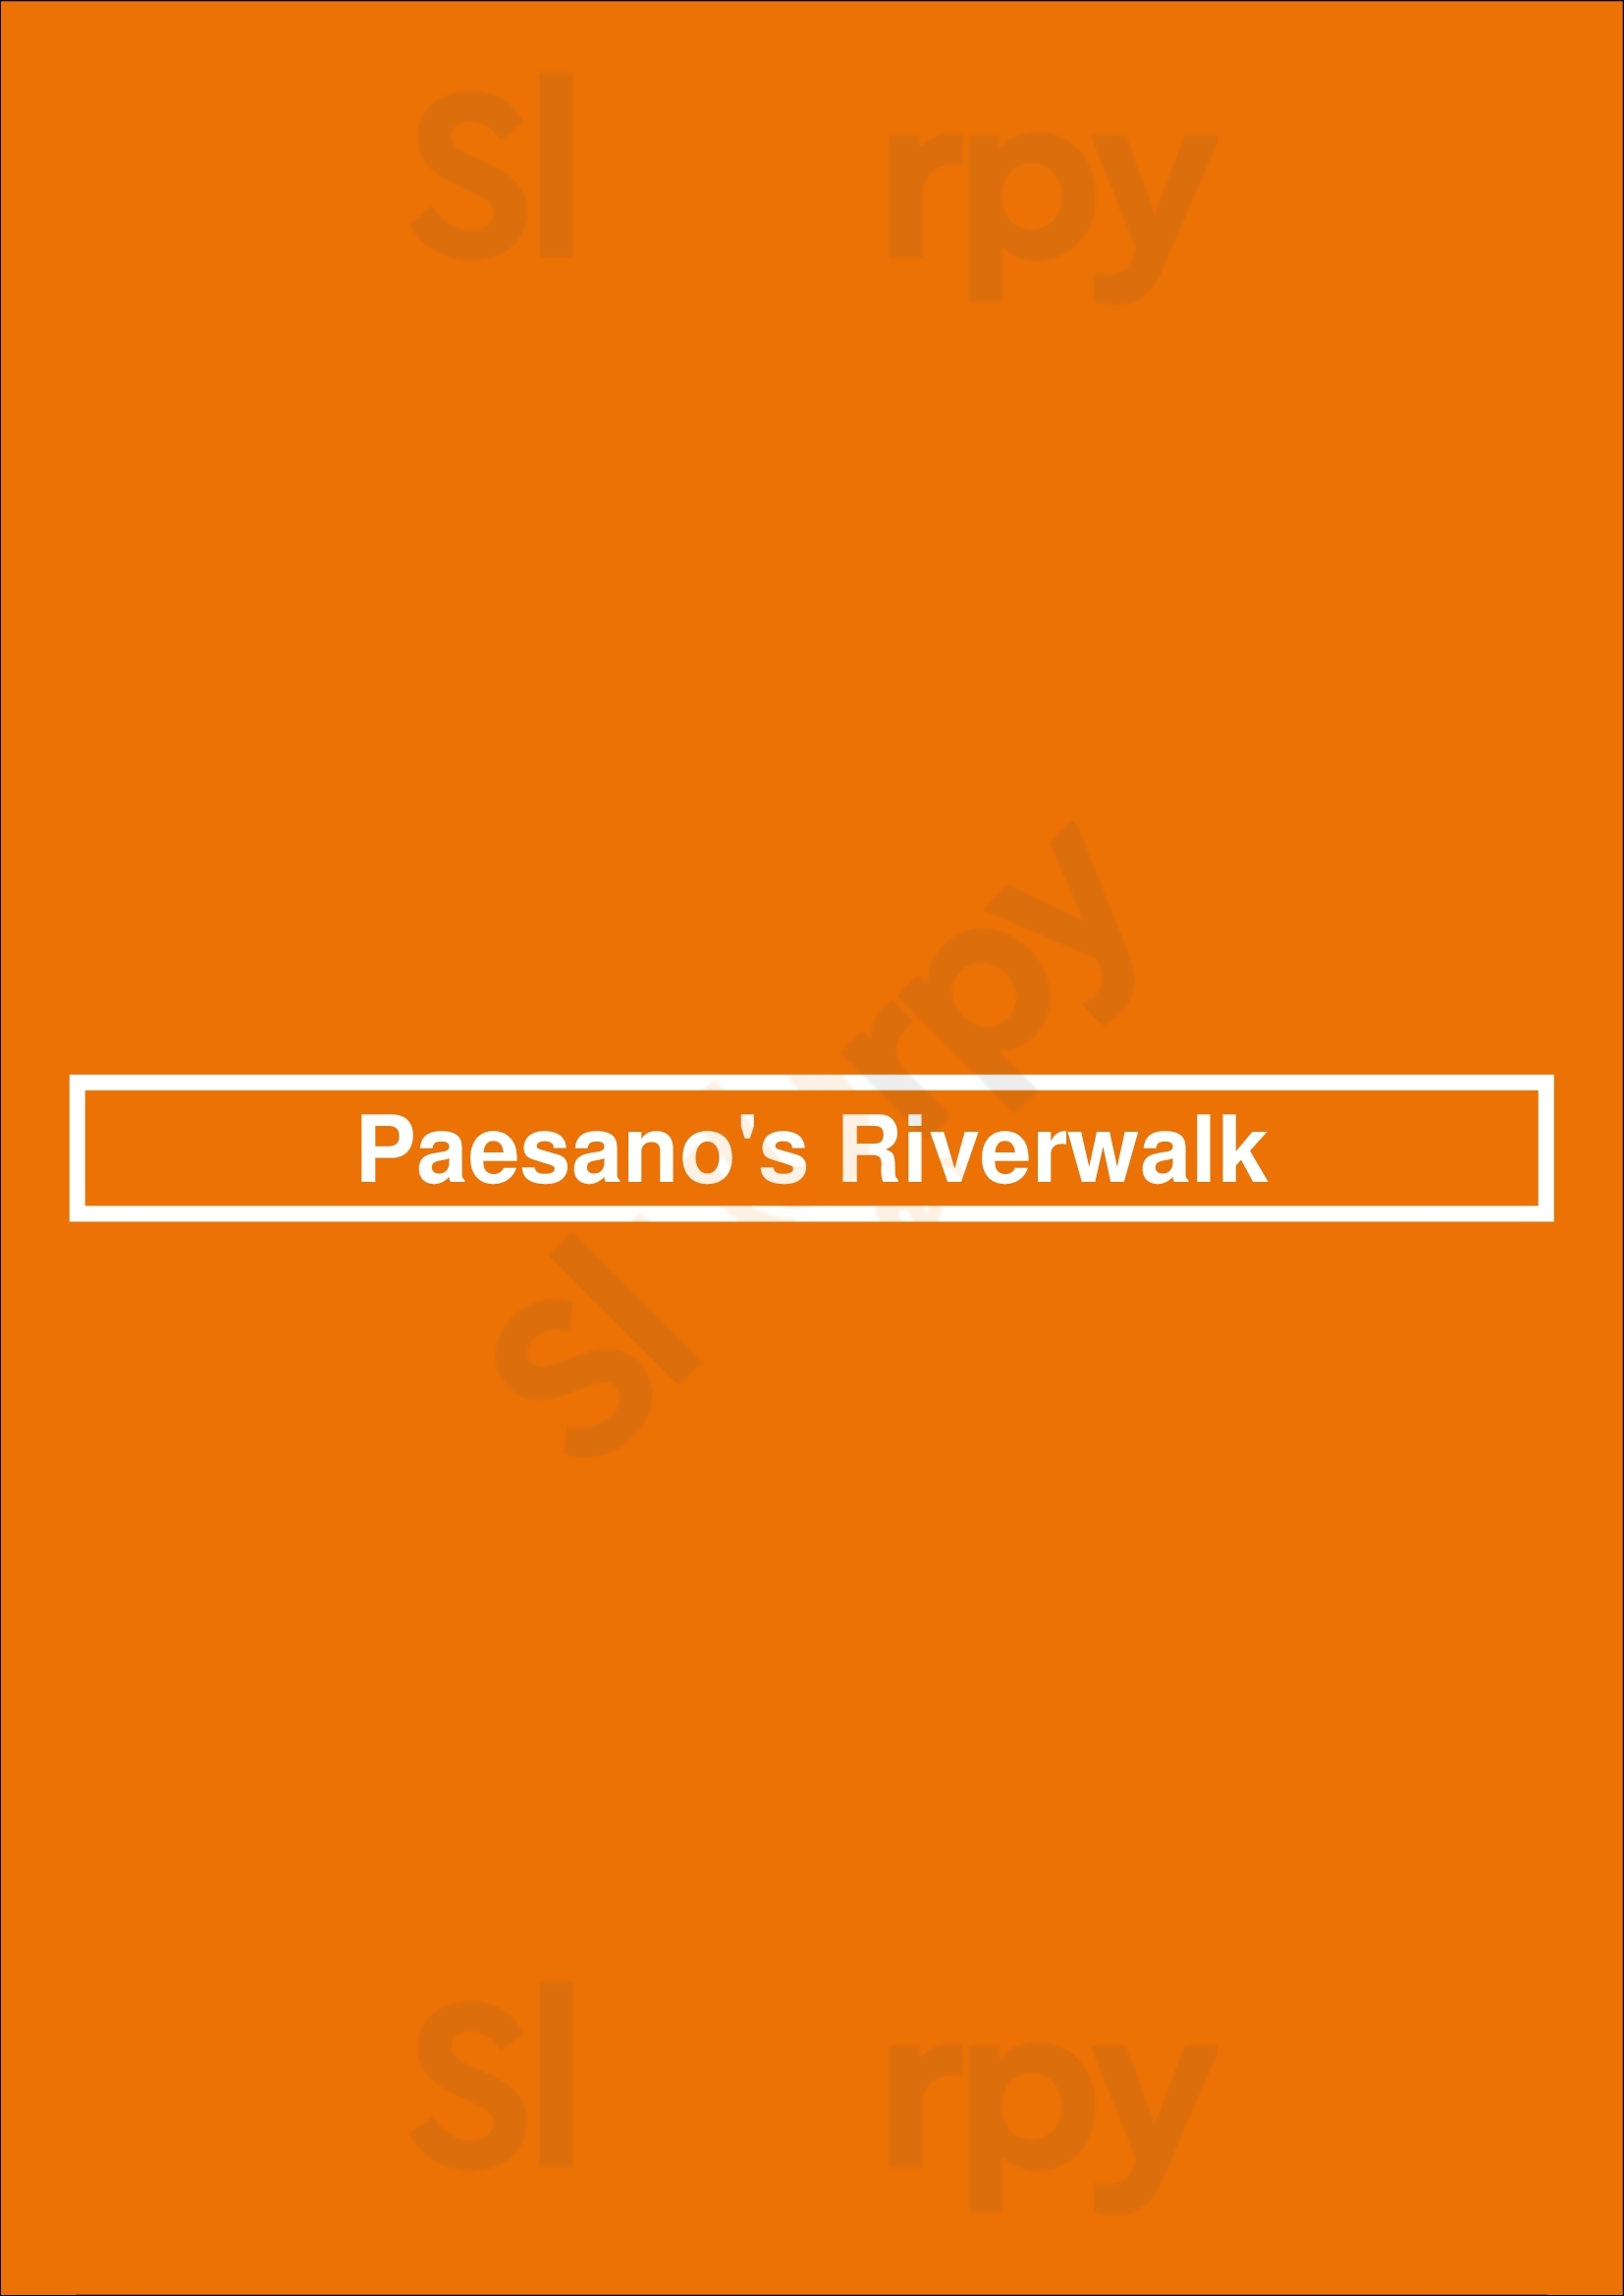 Paesano's Riverwalk San Antonio Menu - 1